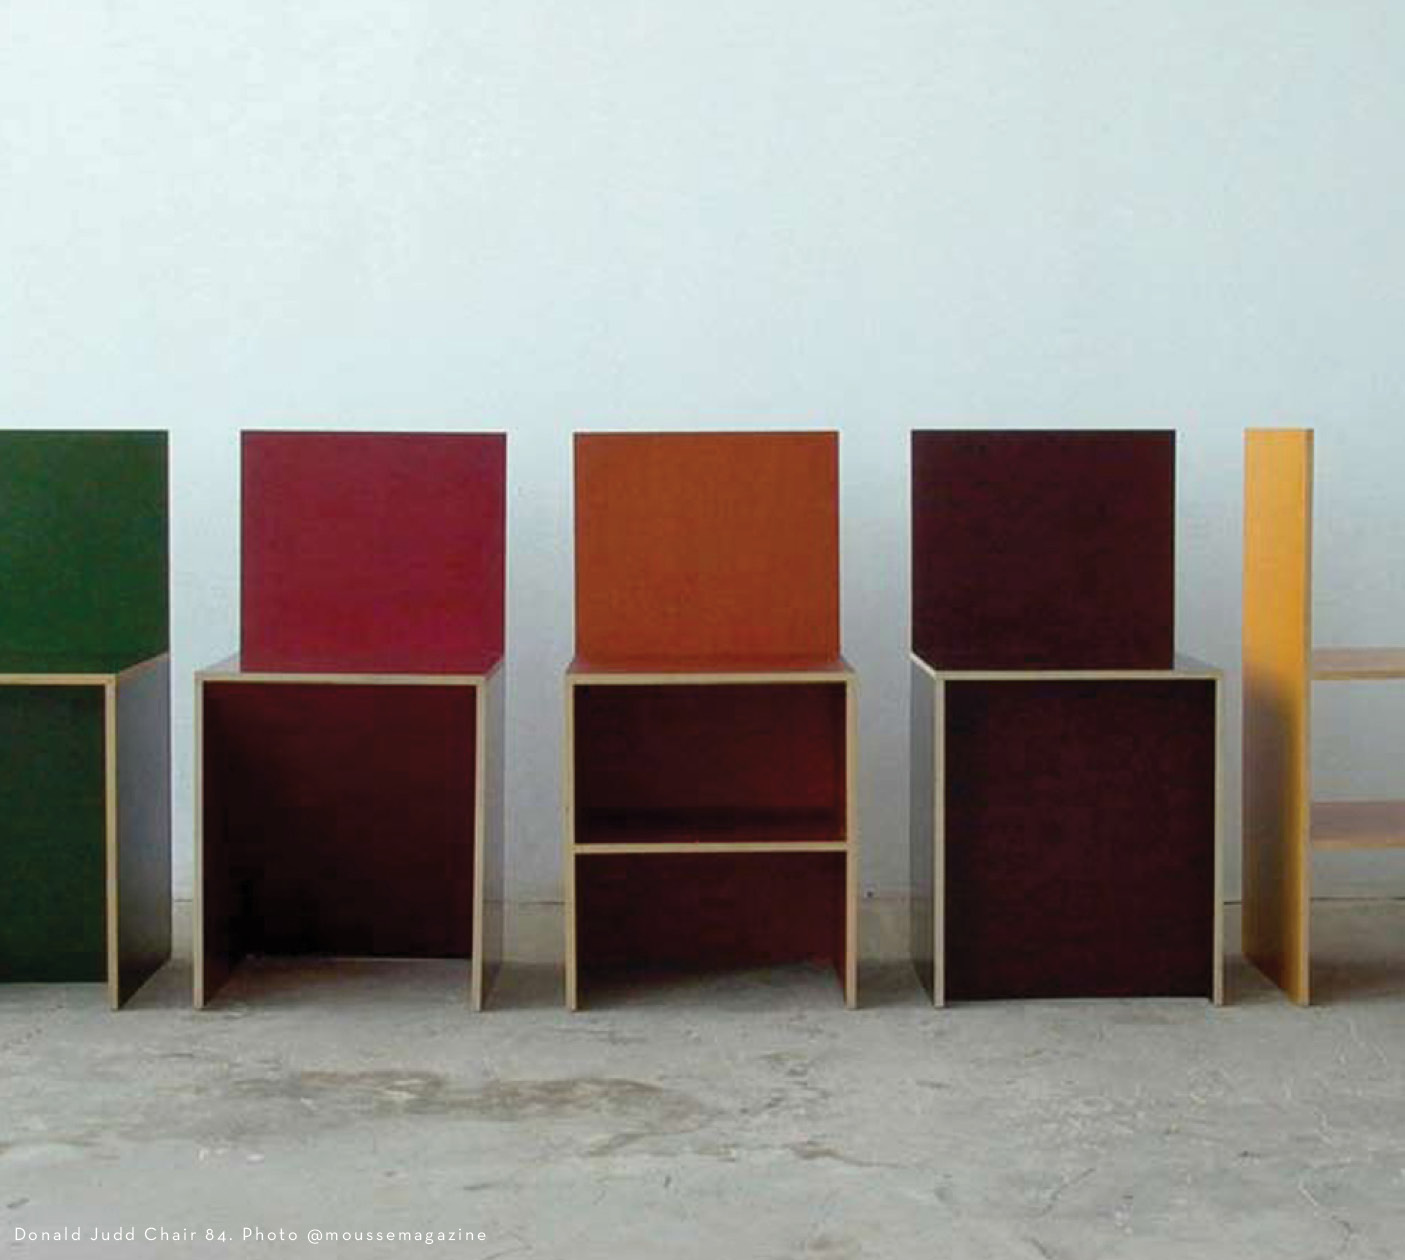 Donald Judd Chair 84 - Colour Inspiration